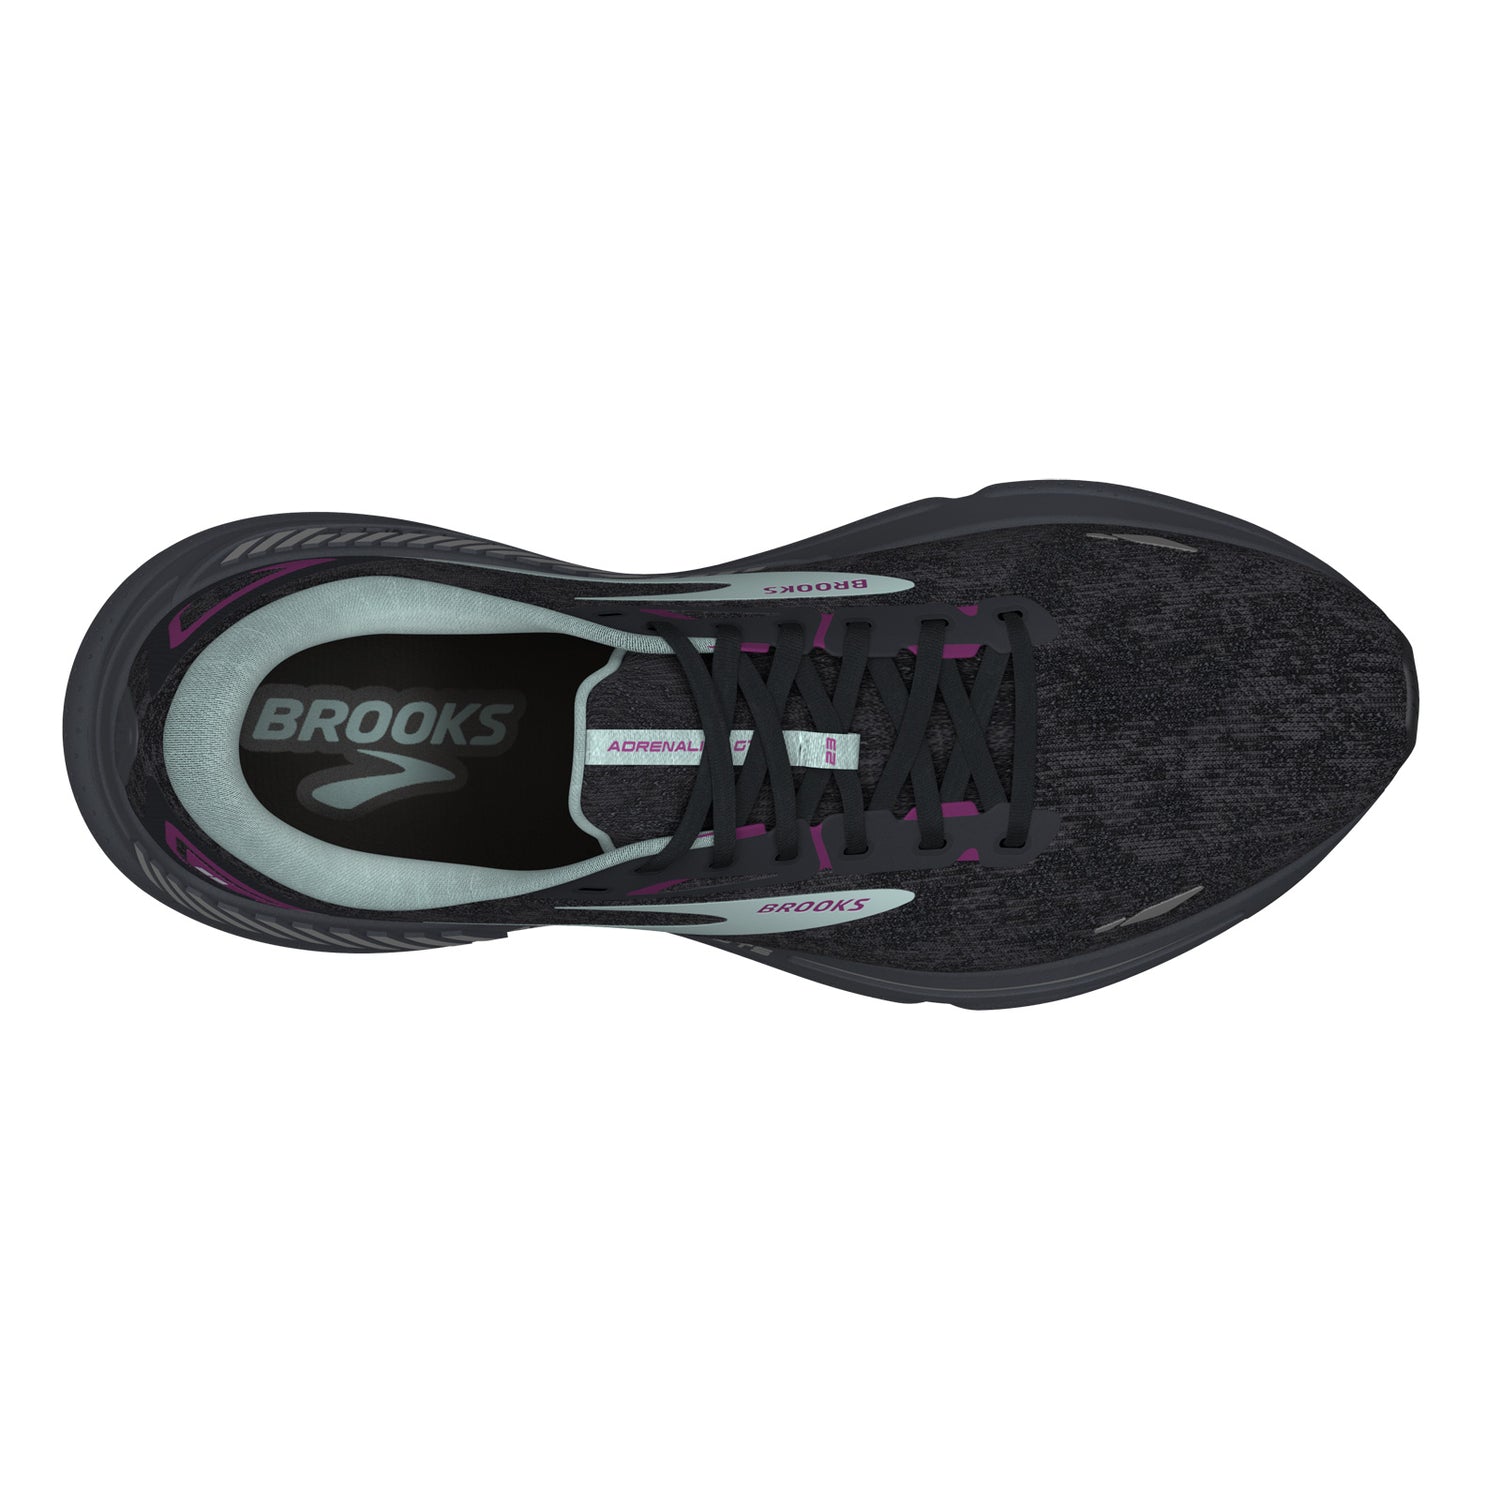 Peltz Shoes  Women's Brooks Adrenaline GTS 23 Running Shoe – Wide Width Black/Light Blue/Purple 120381 1D 072